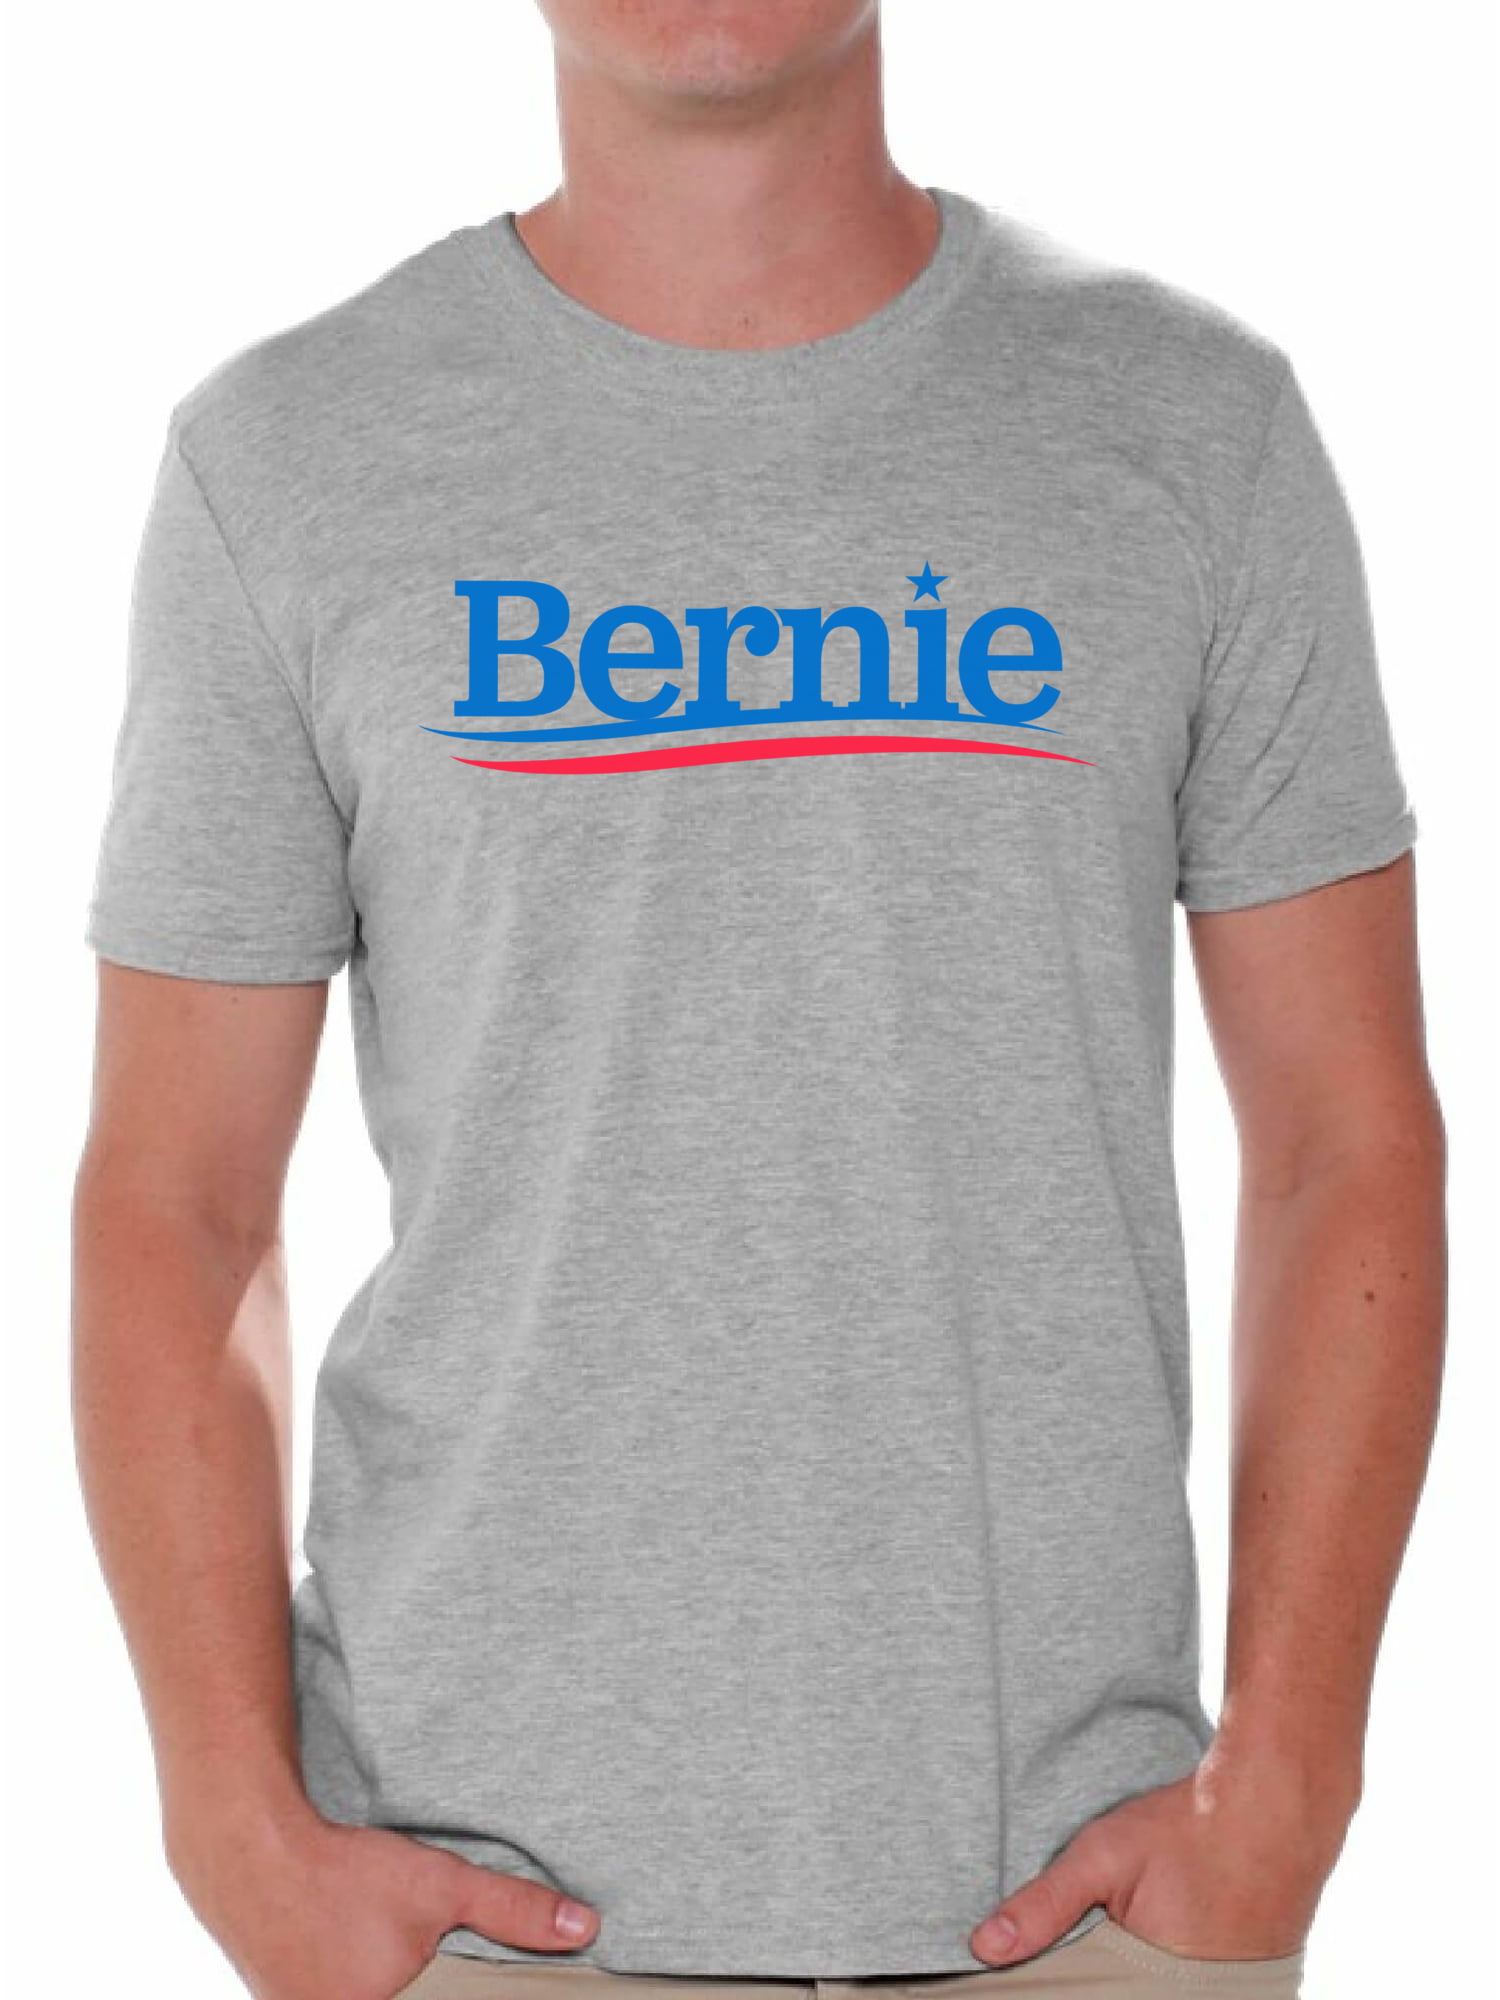 President Vote Politics USA  Mens T-Shirt Bernie Sanders For President 2020